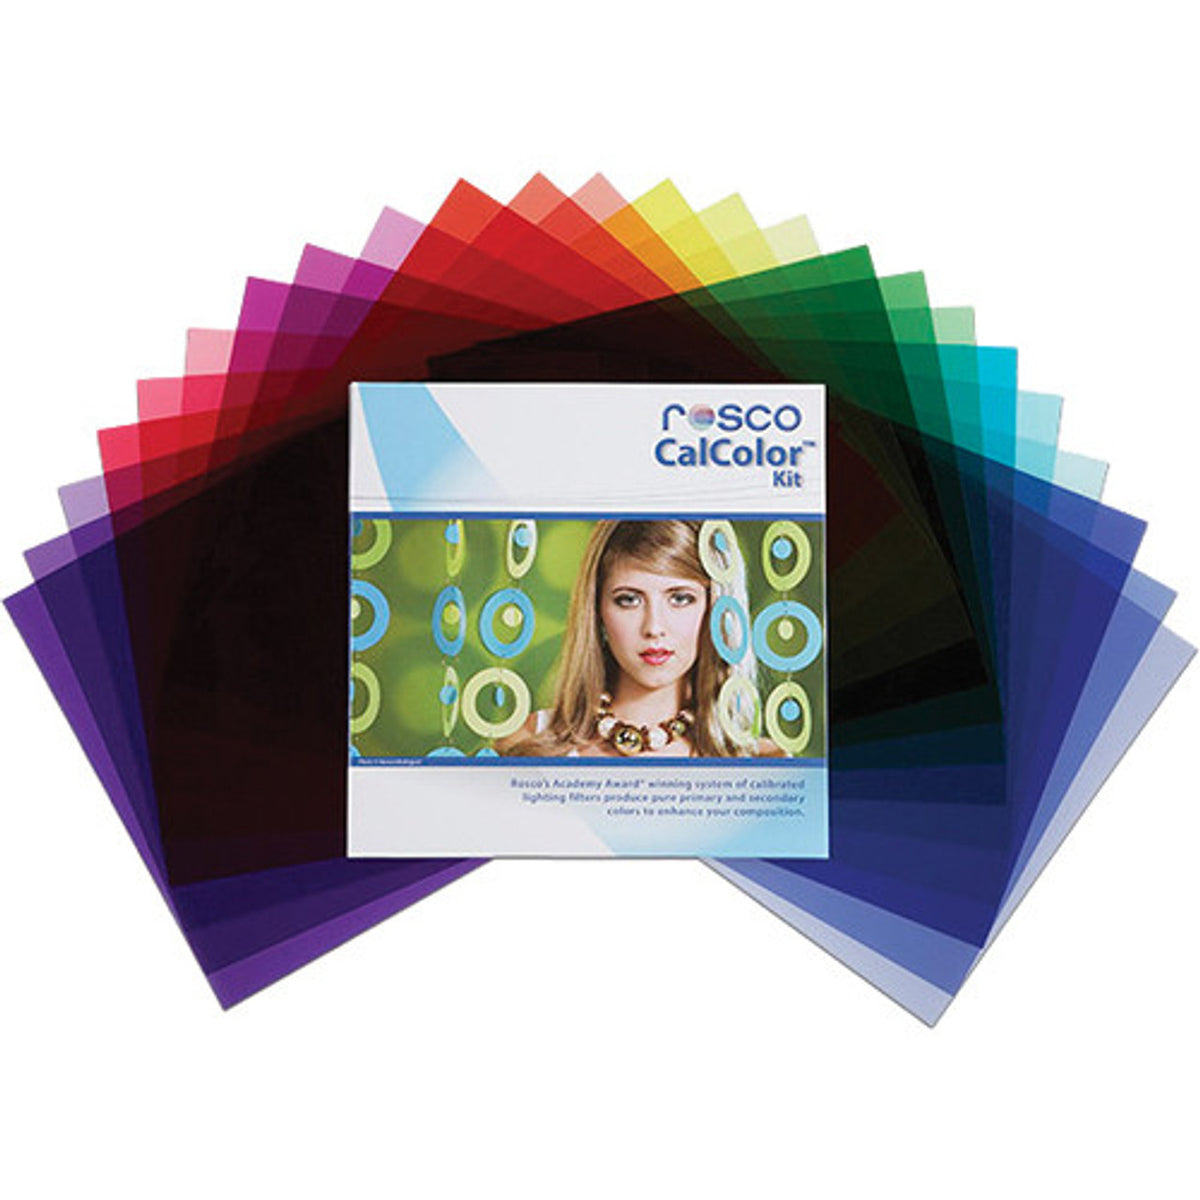 Rosco CalColor Filter Kit (12 x 12")  閃光燈校正色片 Gel紙套装